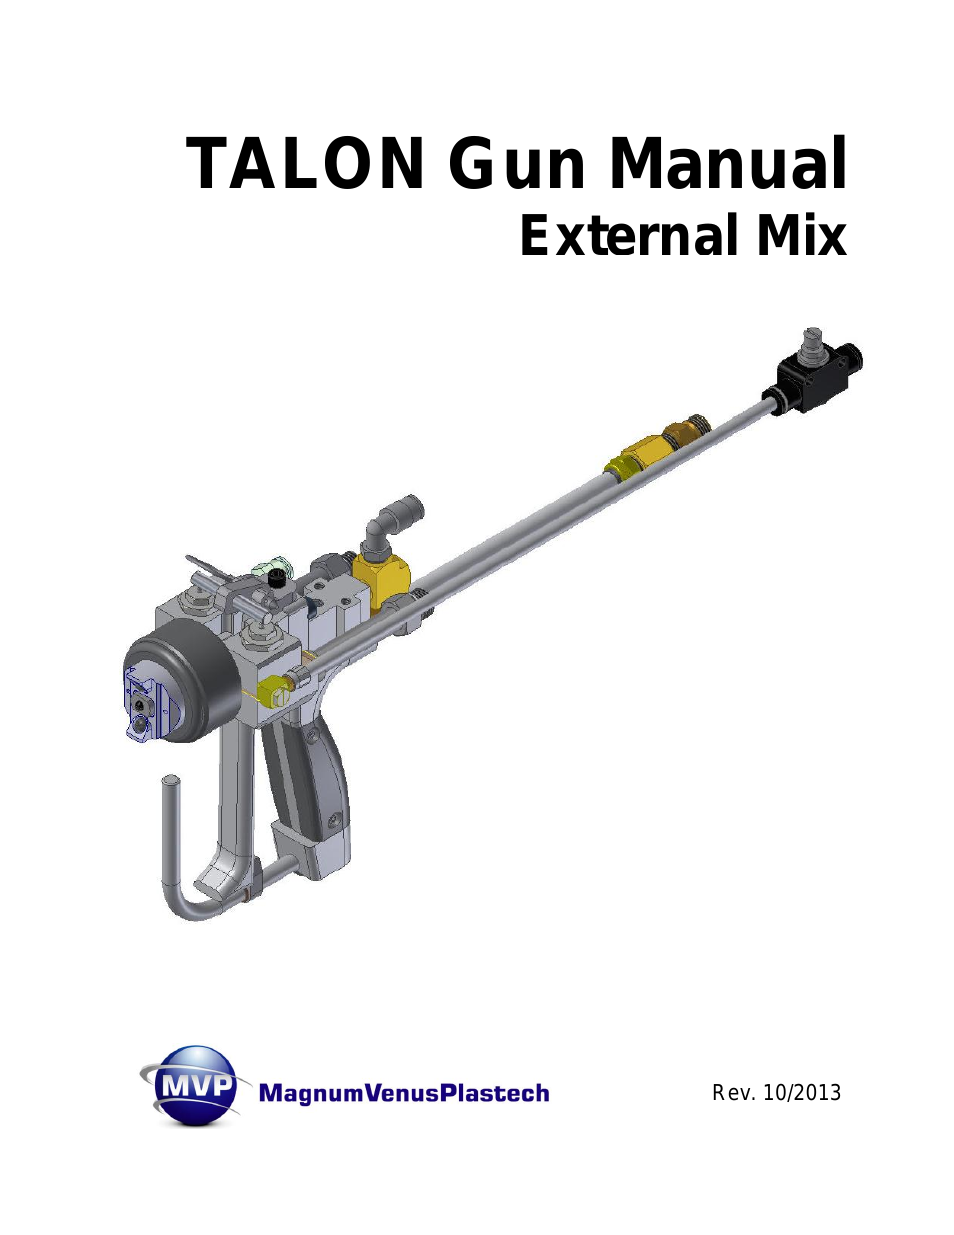 TALON Gun External Mix